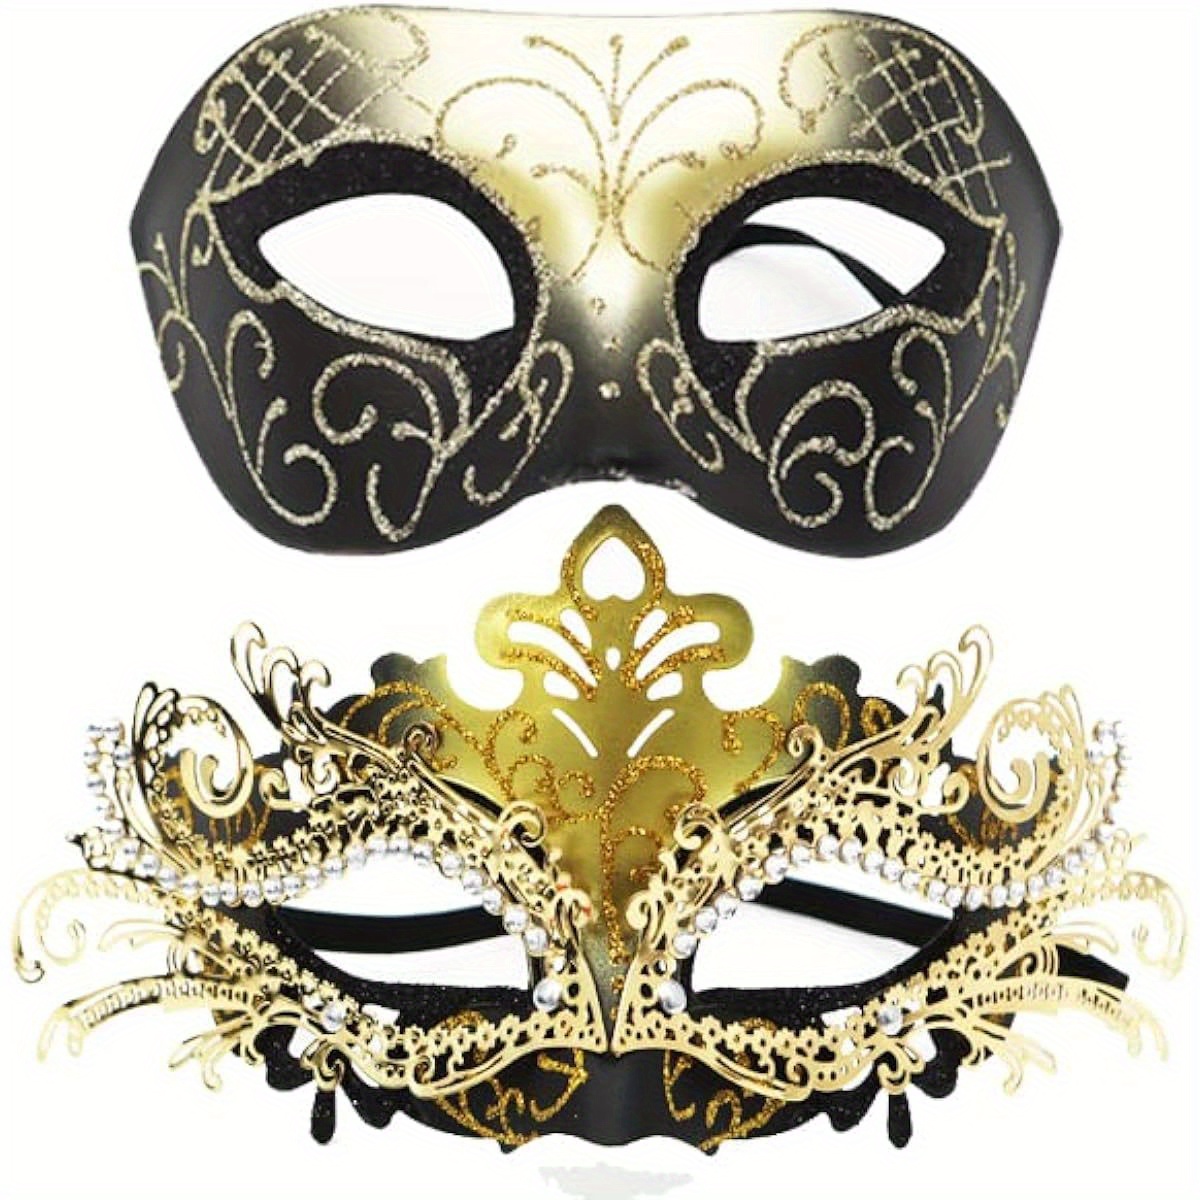 Masque de mascarade pour femmes masque en métal brillant soirée bal